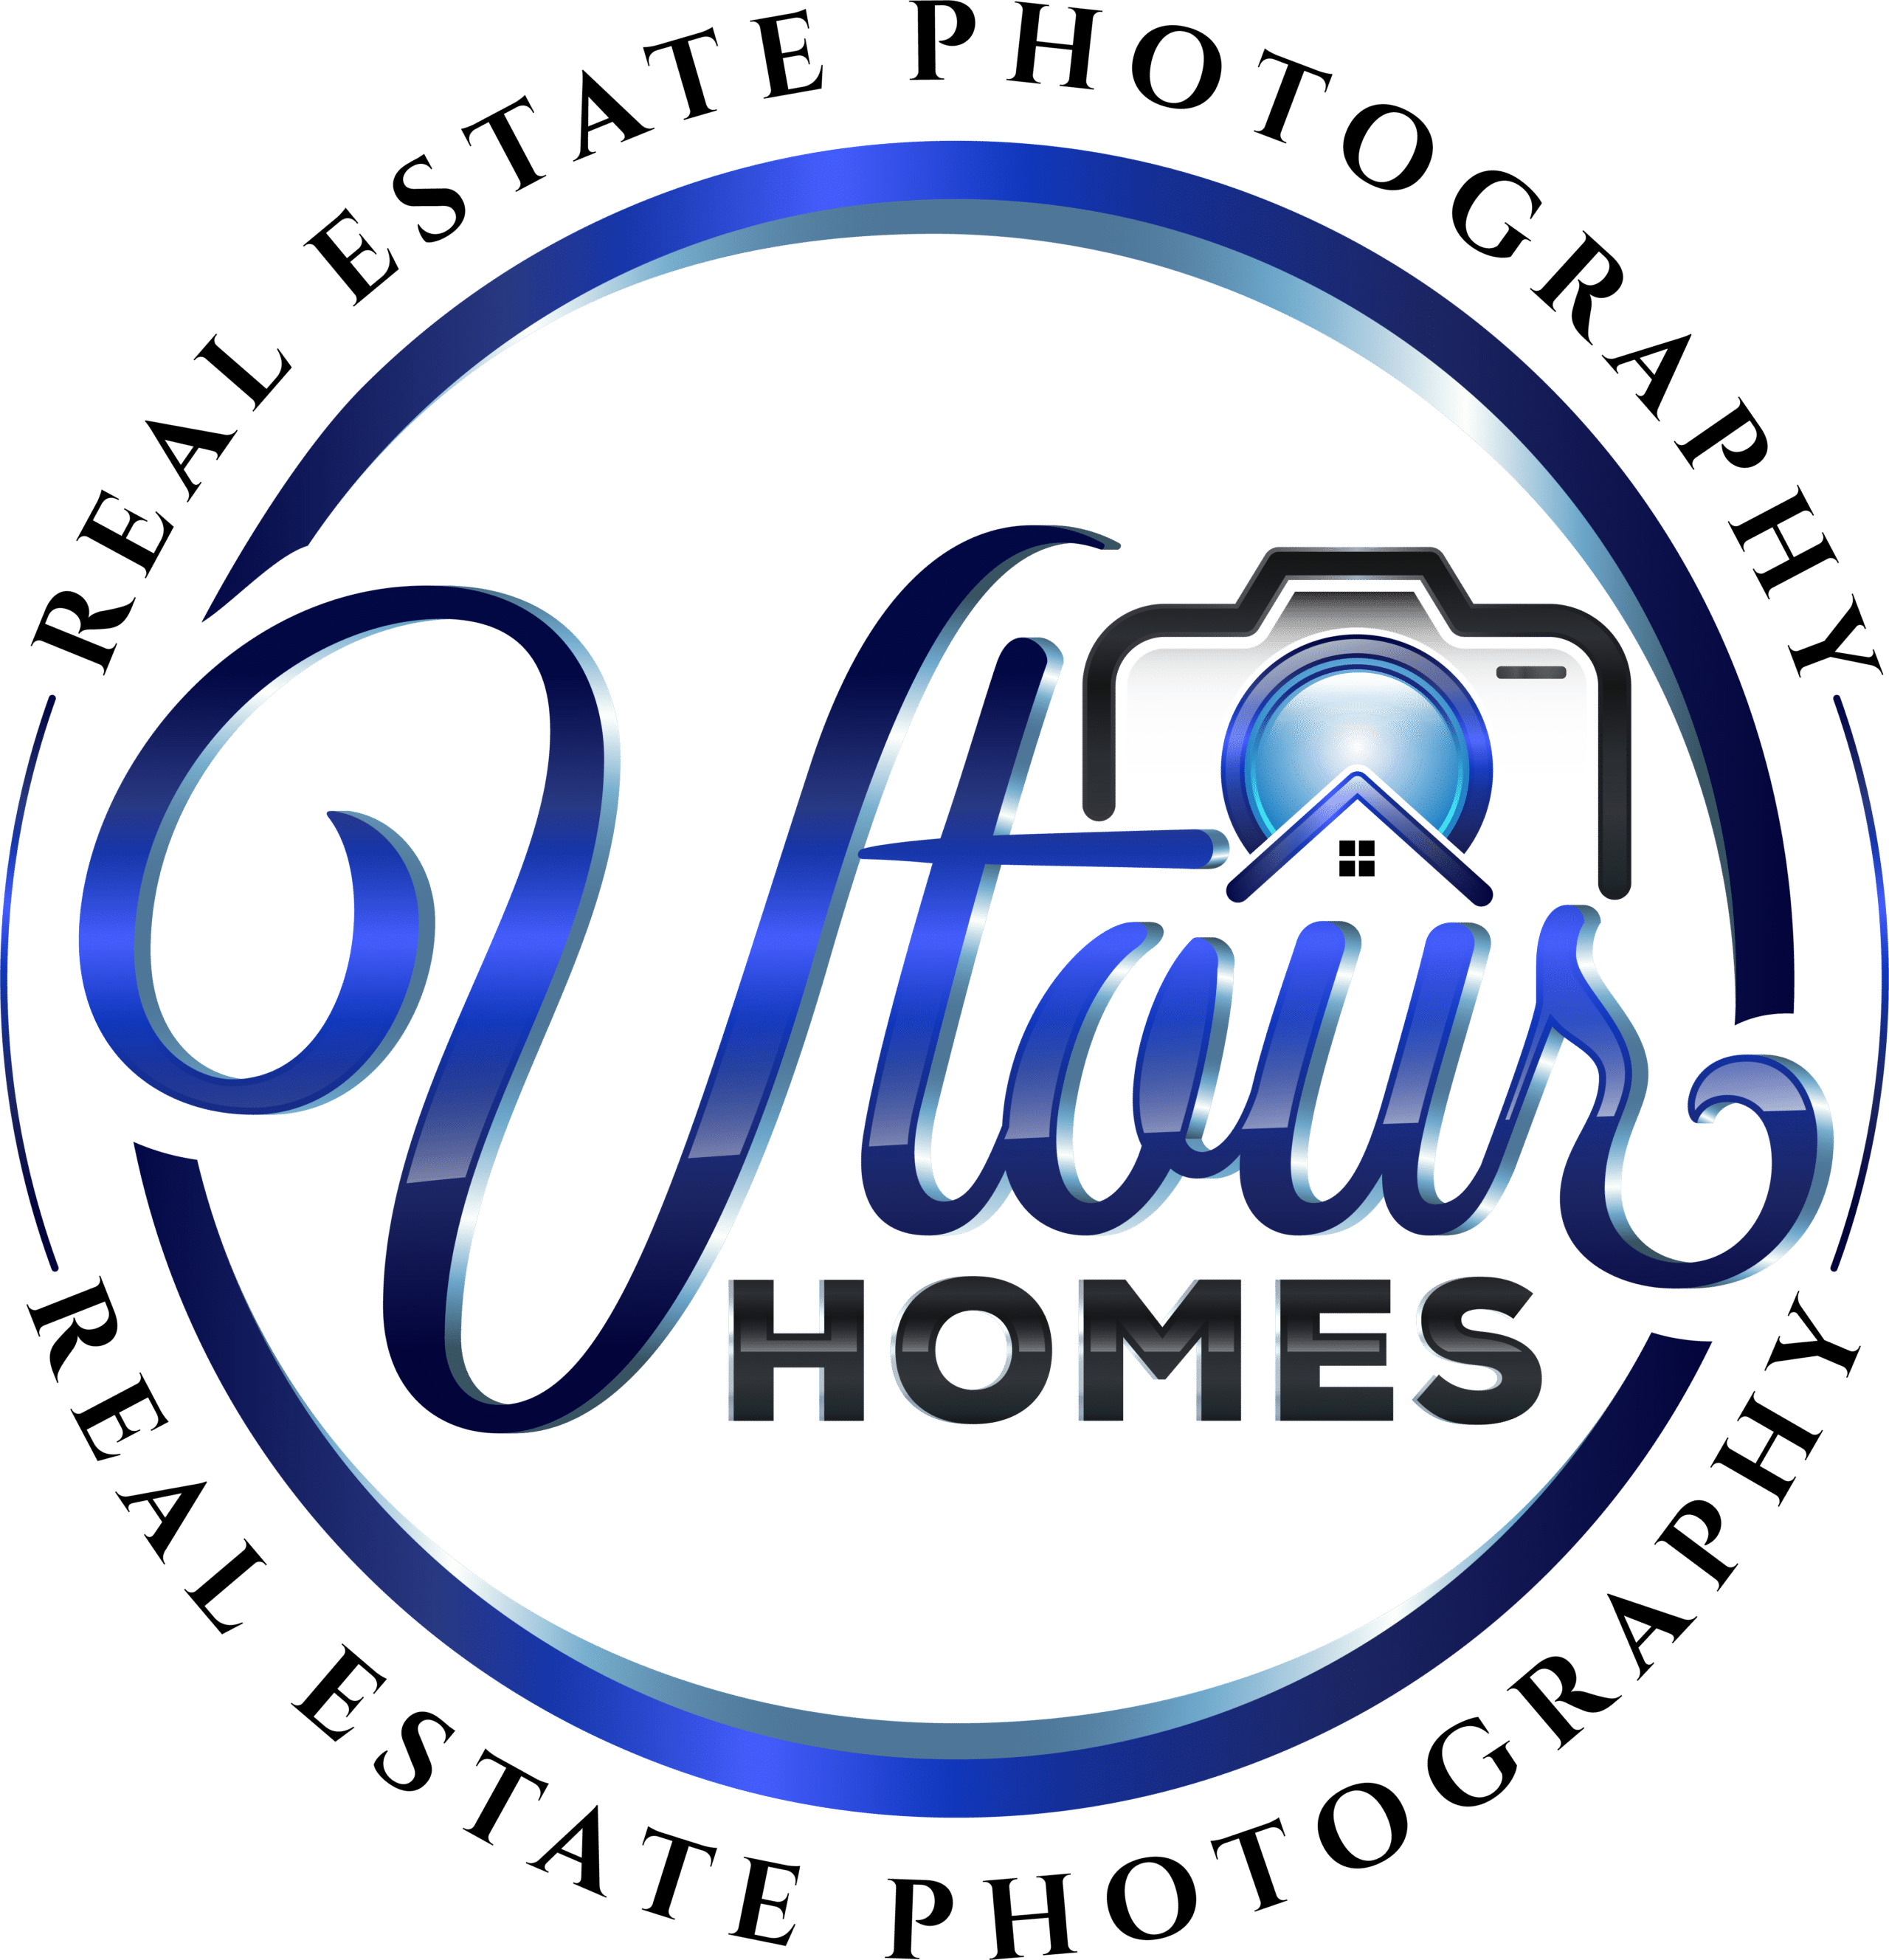 VTour Homes | Real Estate Photographers